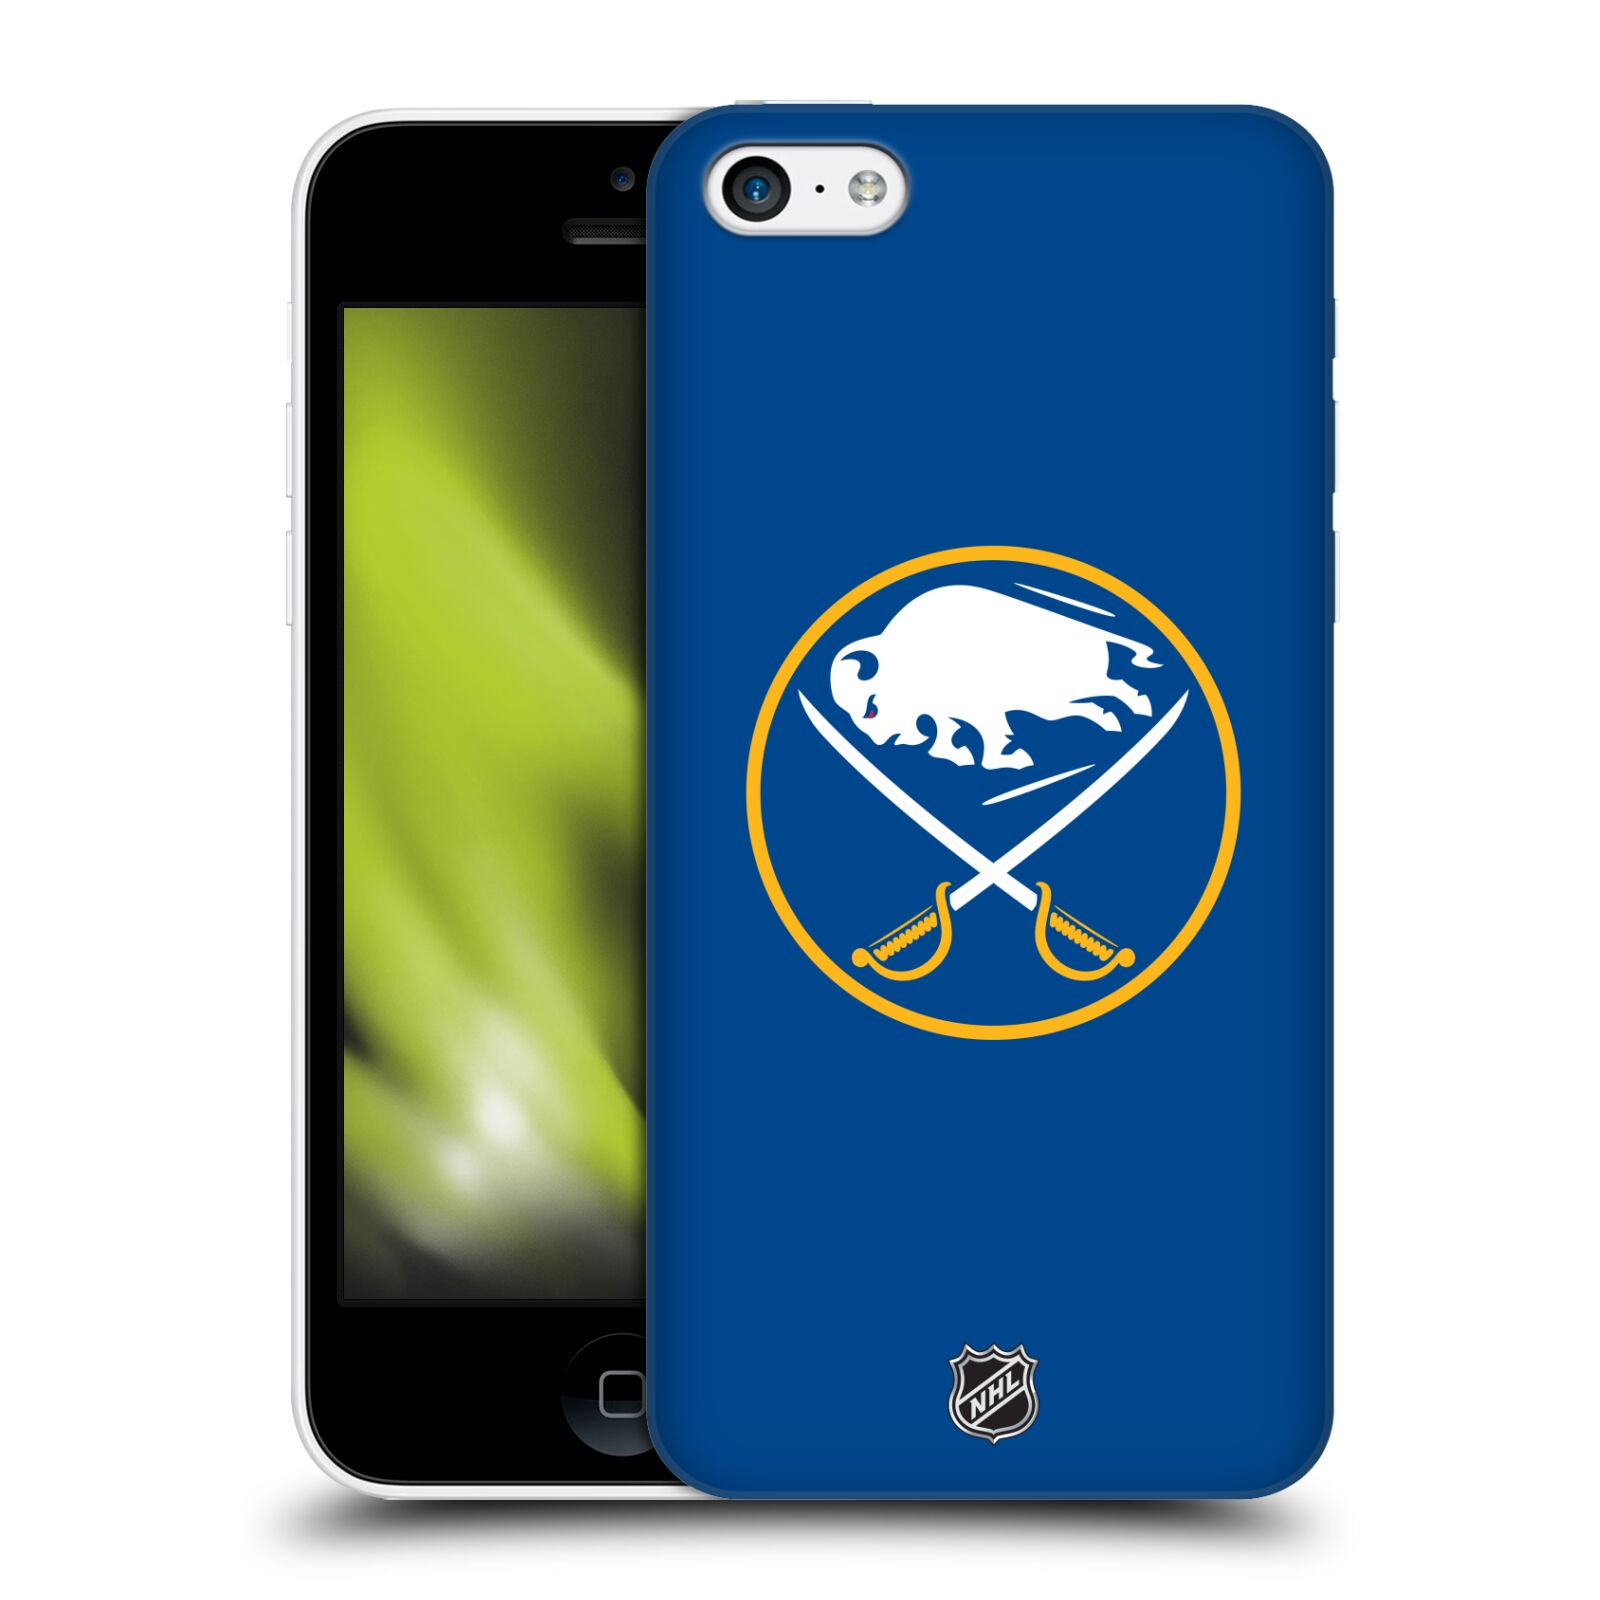 Pouzdro na mobil Apple Iphone 5C - HEAD CASE - Hokej NHL - Buffalo Sabres - modré pozadí